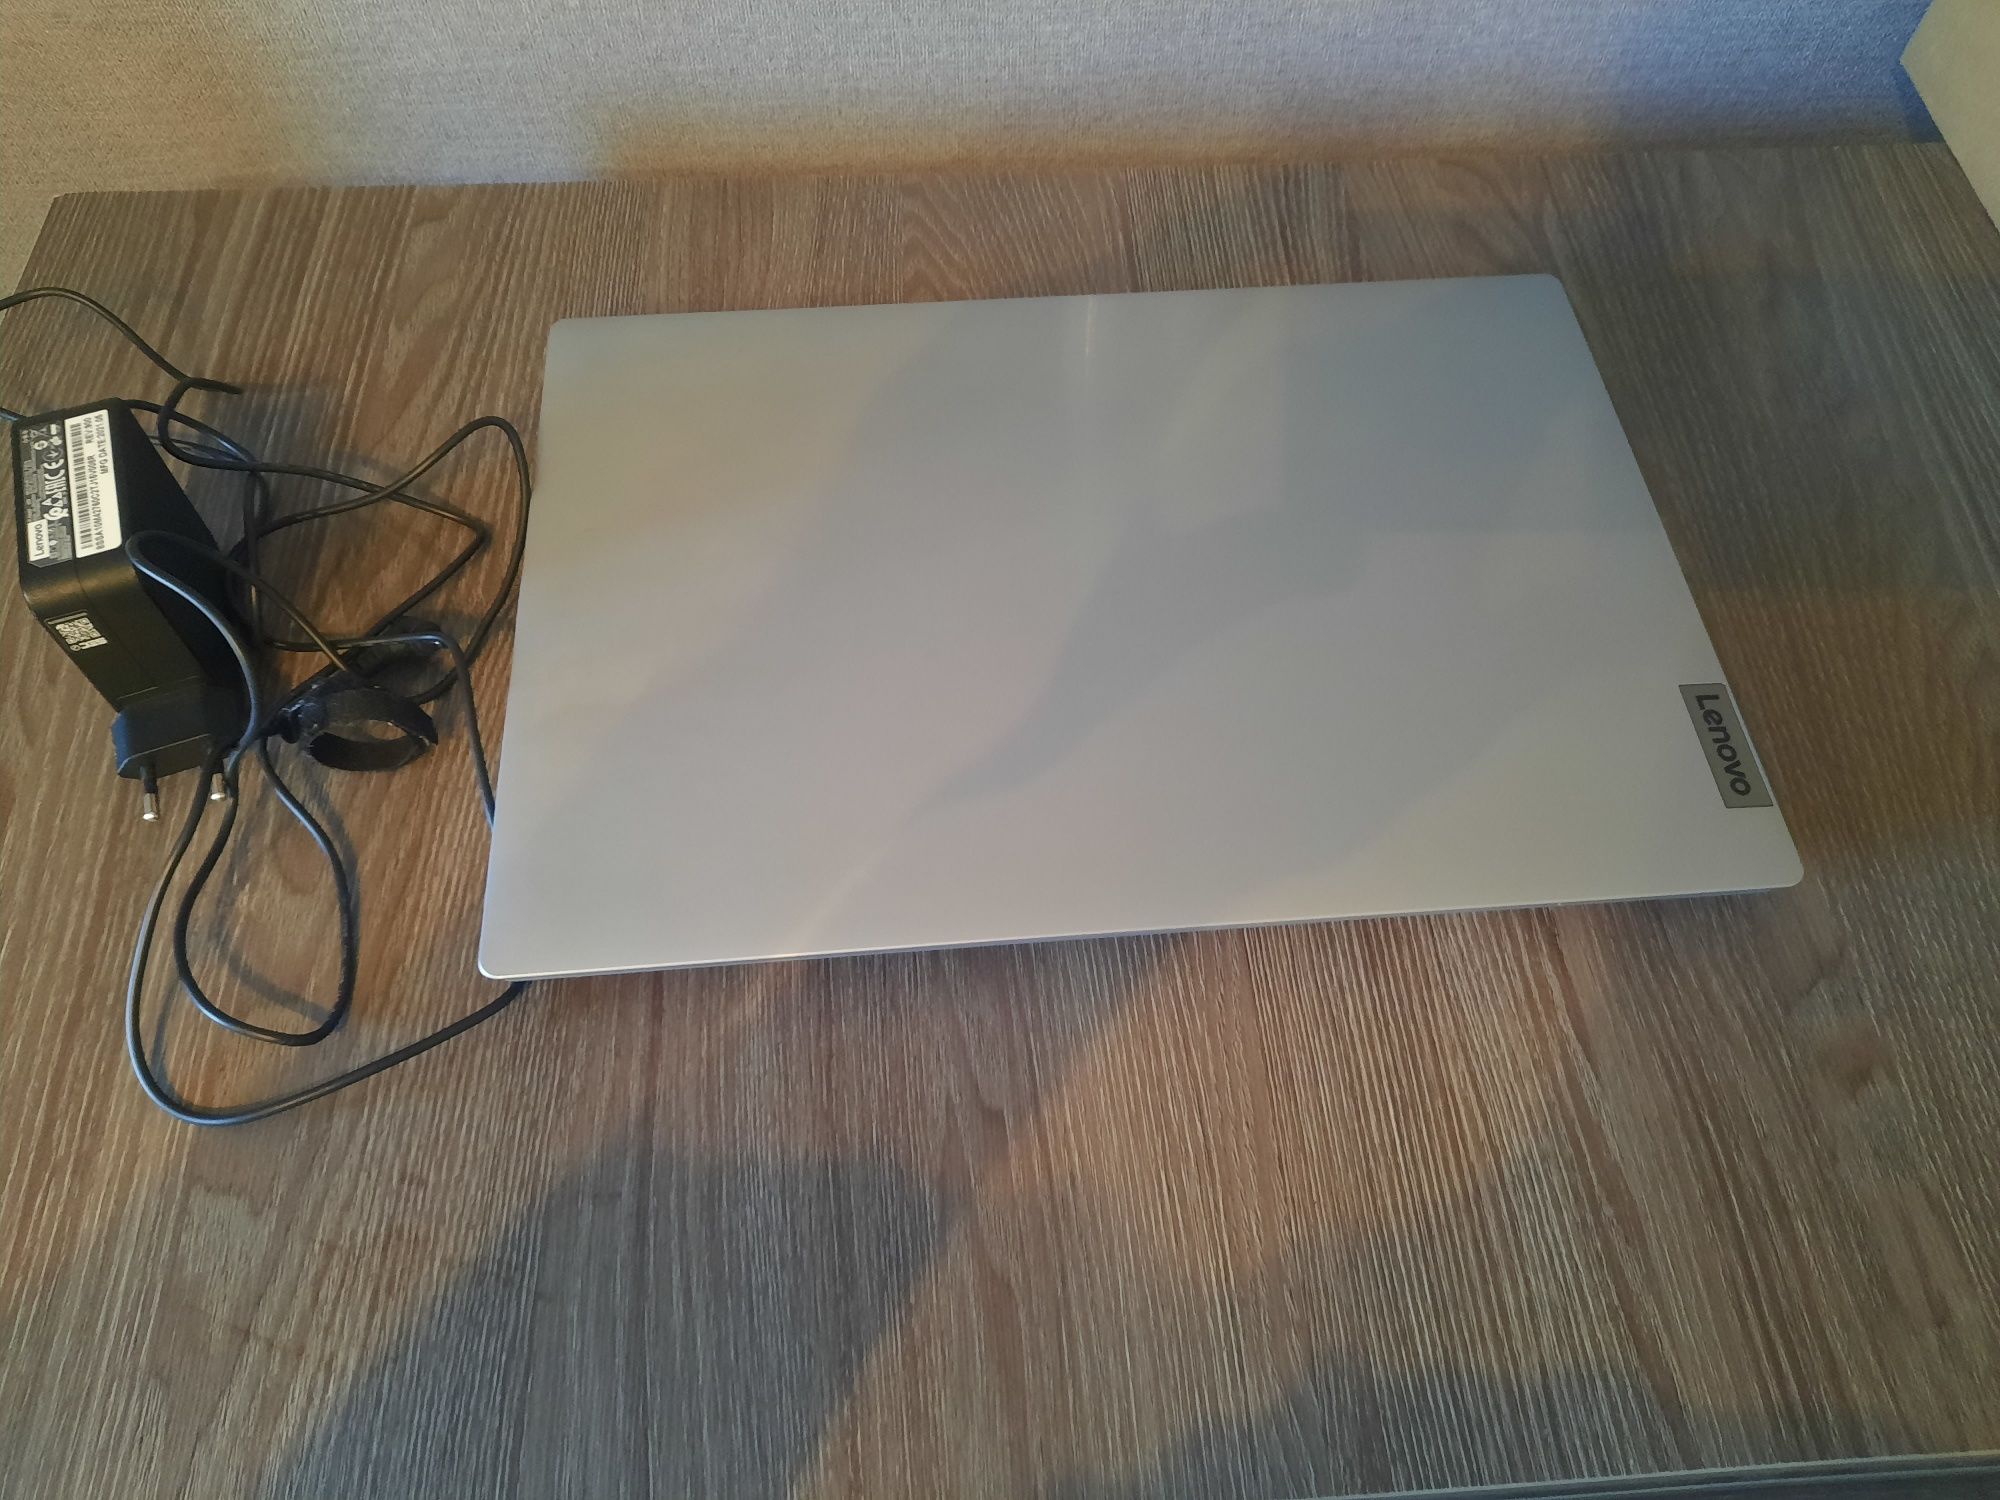 Продам новый ноутбук Lenova IdeaPad 3 на гарантии